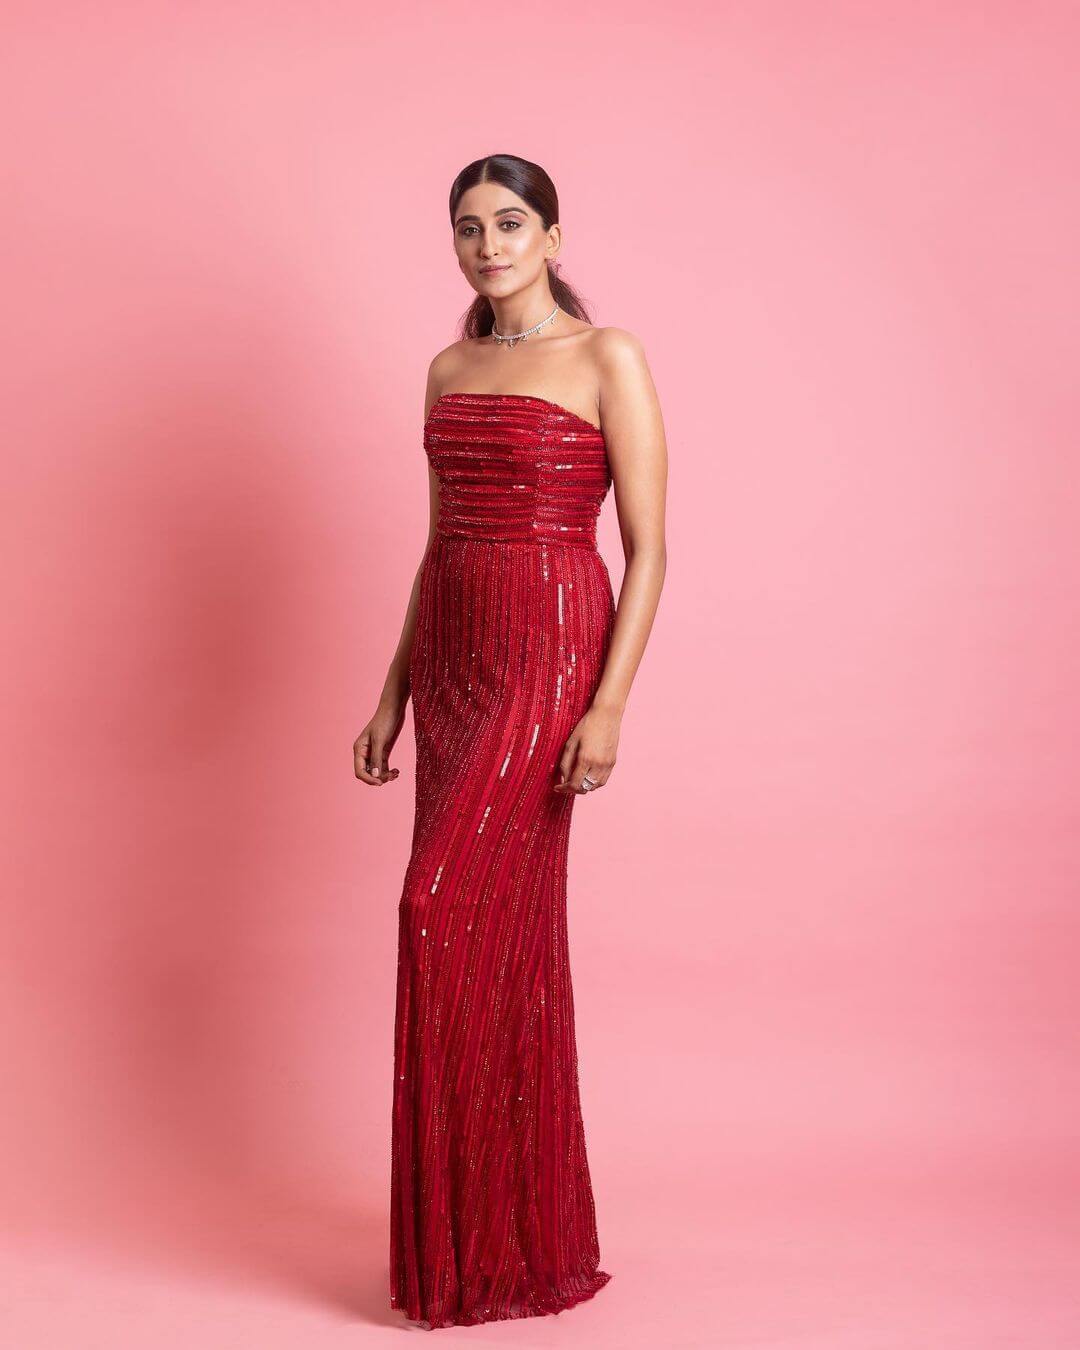 Nimrit Kaur Ahluwalia Sizzles In Red Hot Glittery Cocktail Dress